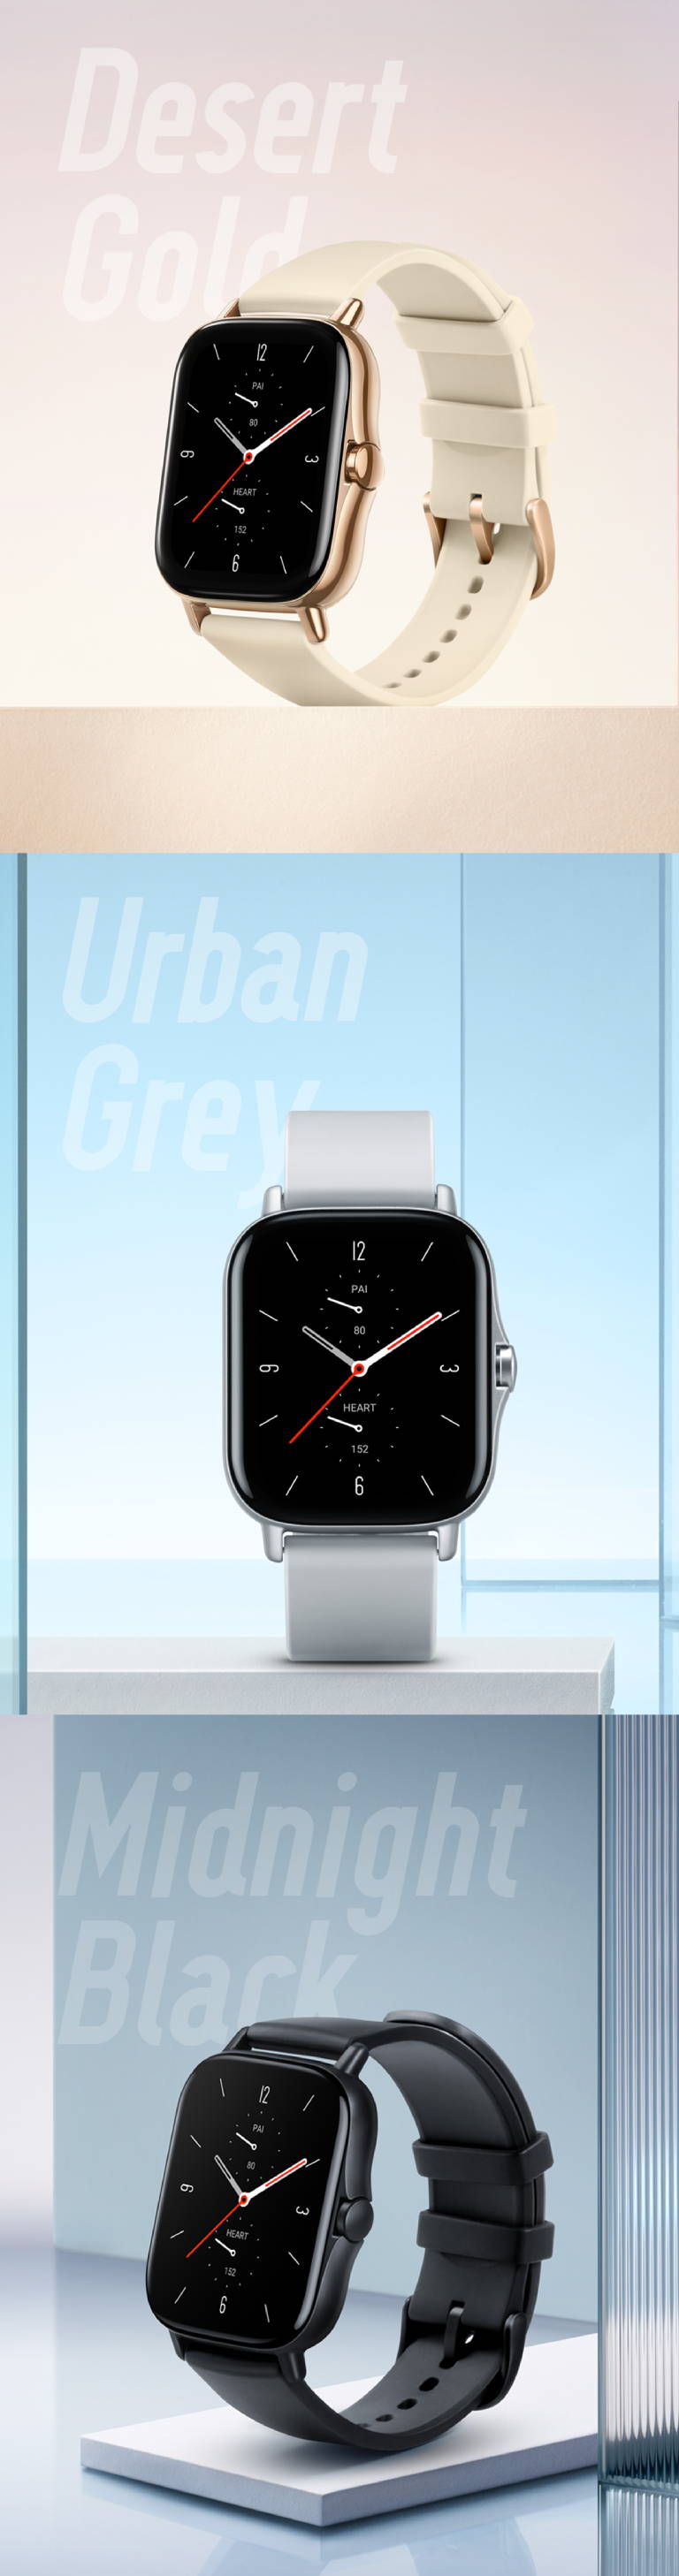 Buy Amazfit GTS 2 Smart Watch @ ₹9999.0 | Amazfit Official Store